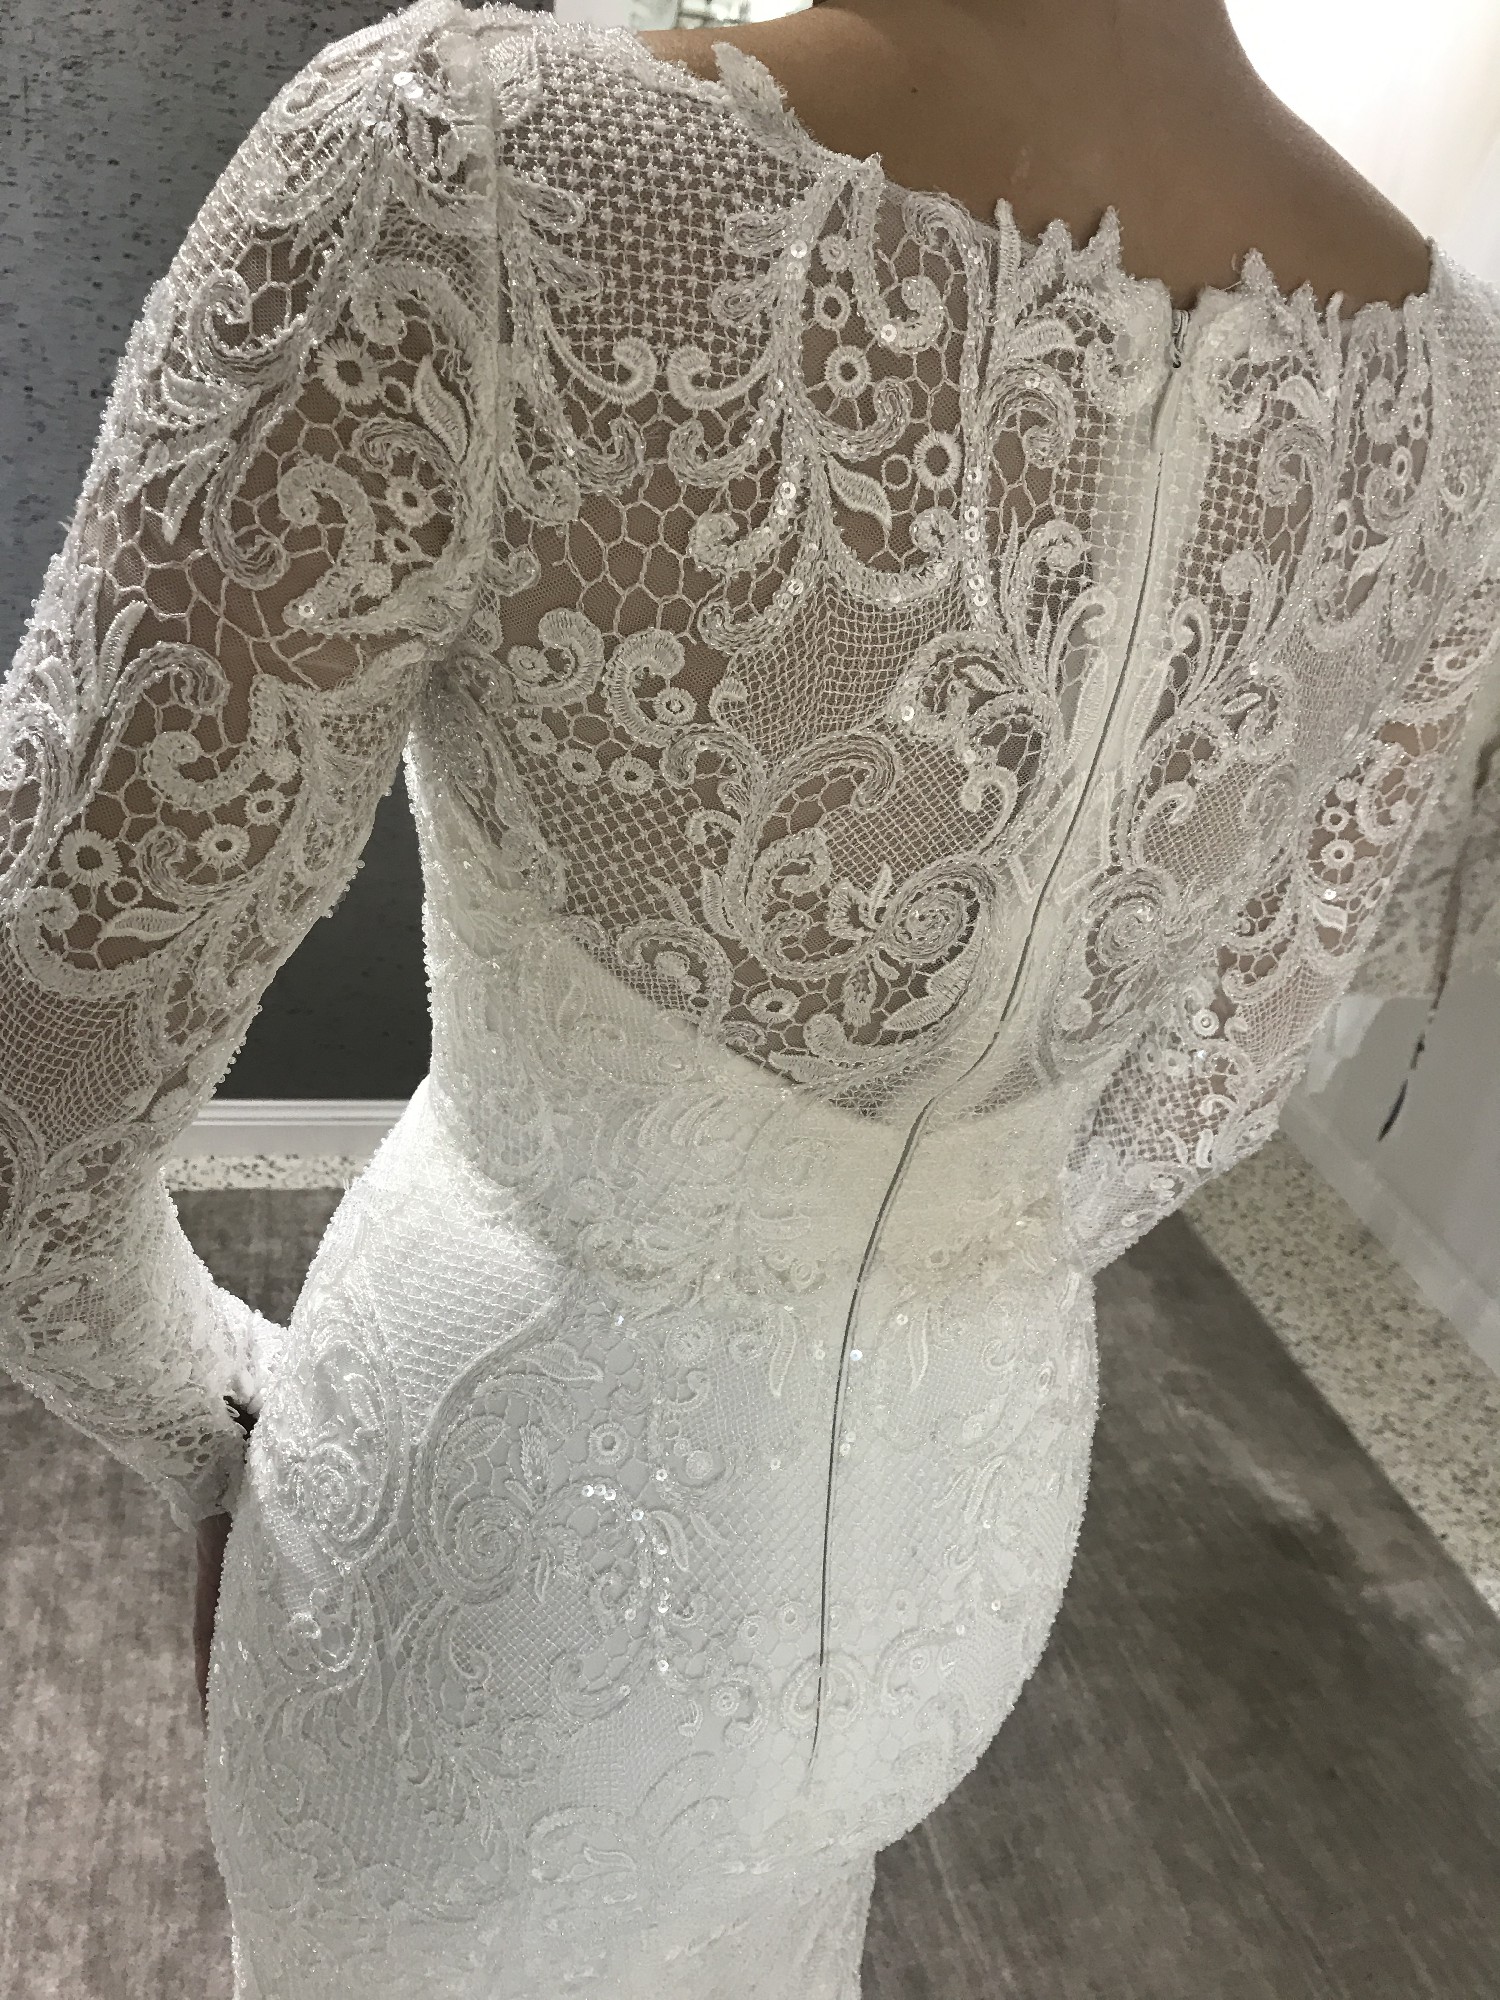 Ender Legard Custom Made Sample Wedding Dress Save 81% - Stillwhite